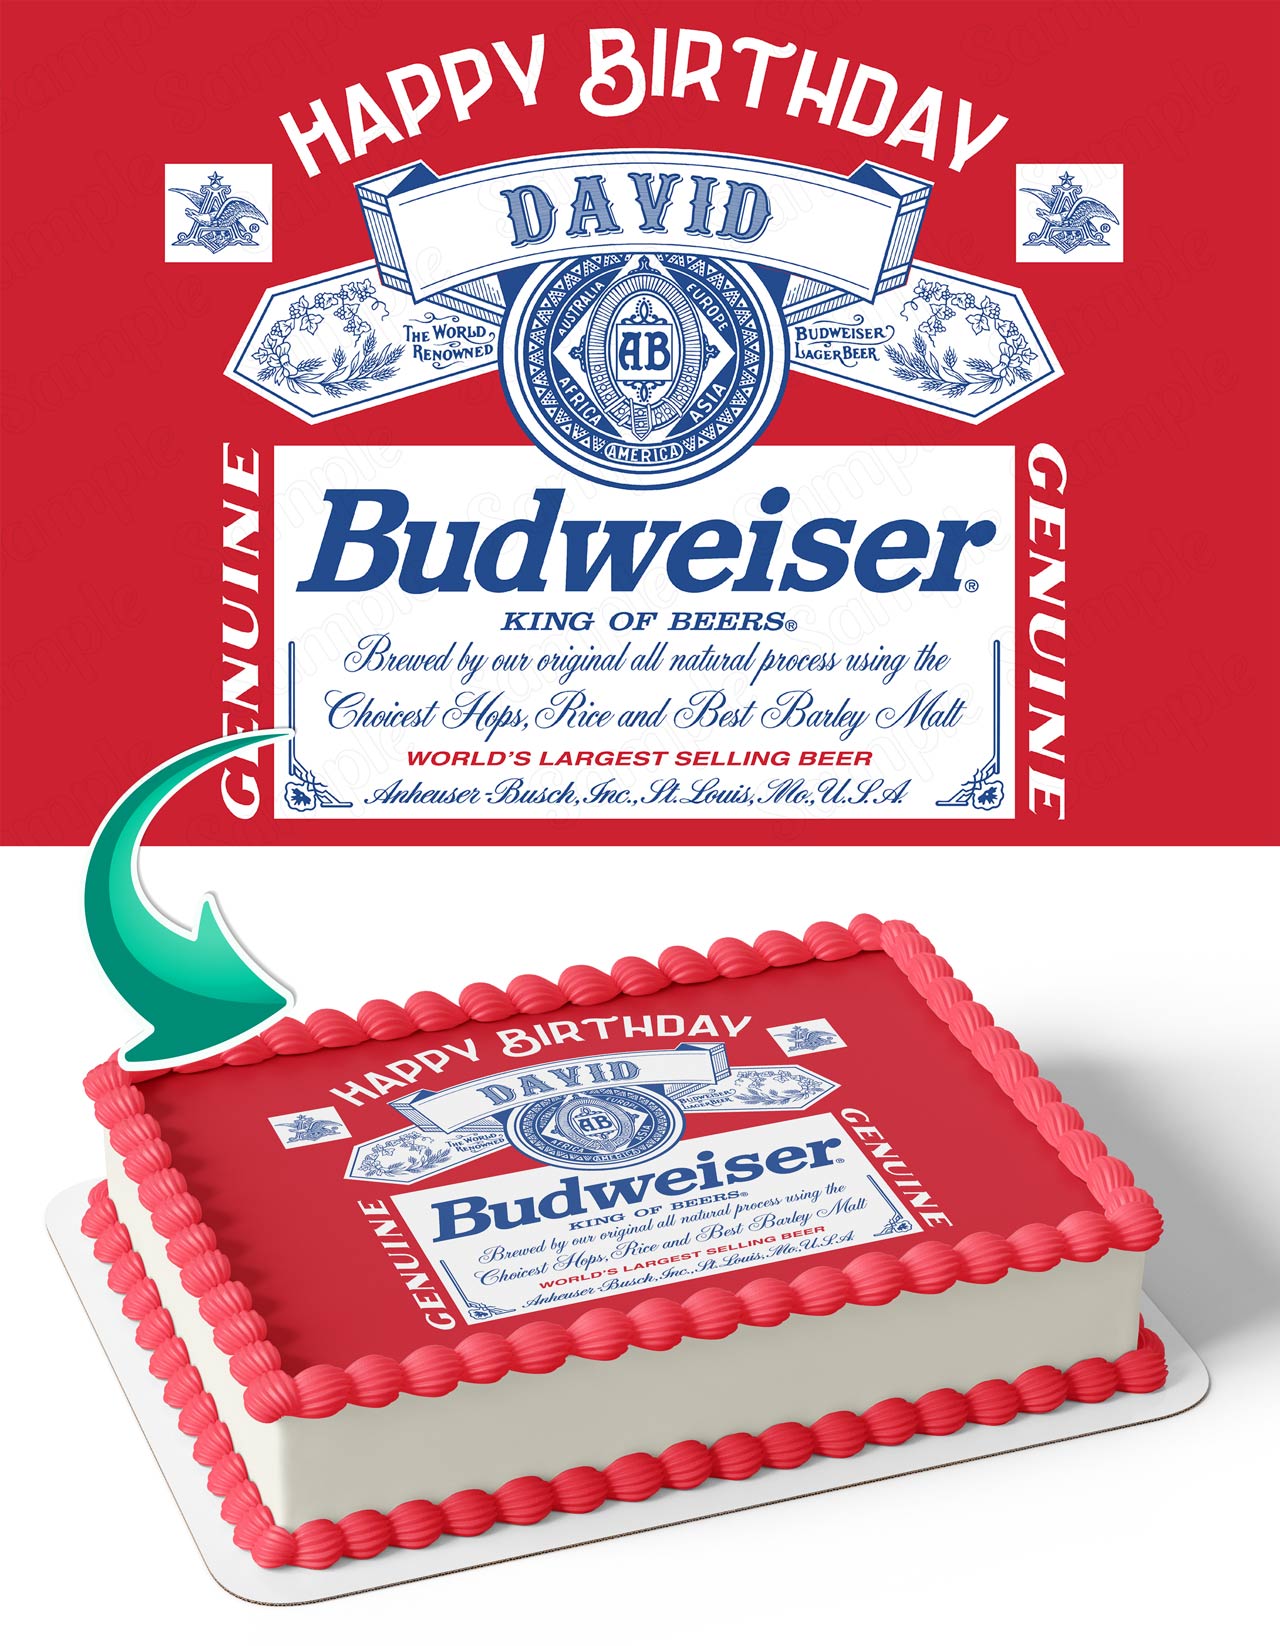 Budweiser Theme Birthday Cake for Men - Joy Bakery & Tea Cafe